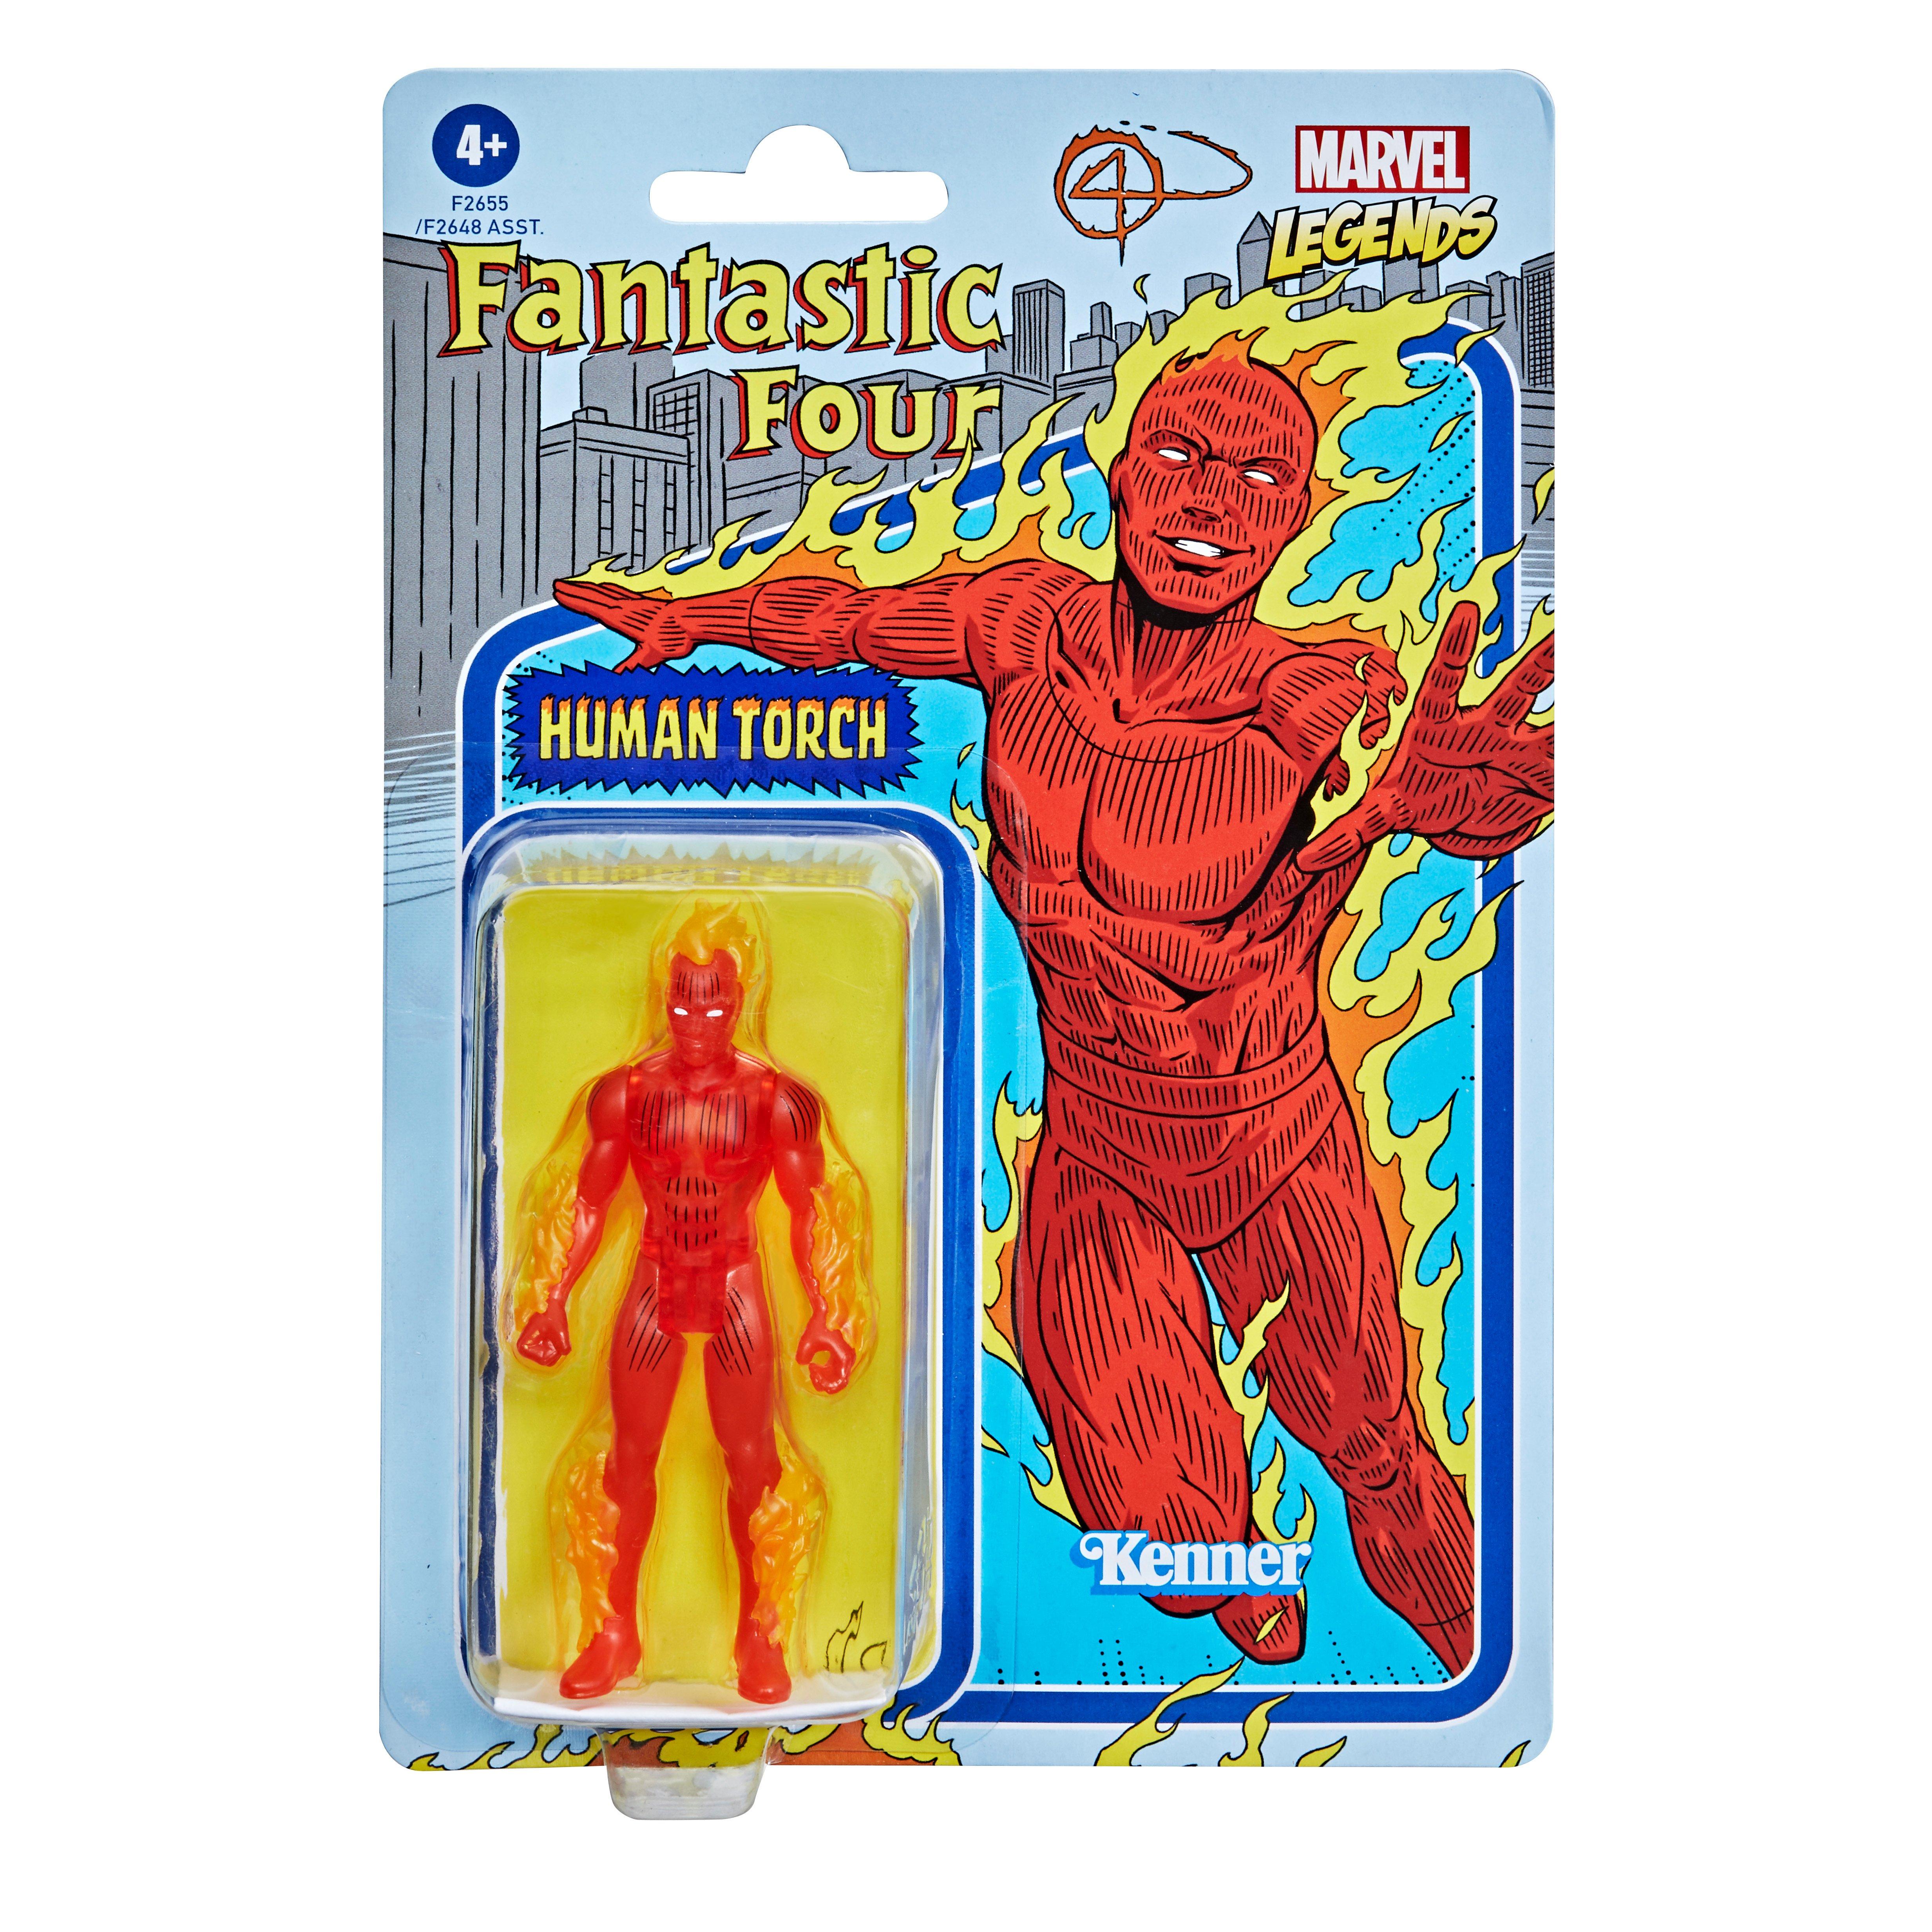 Torche Humaine Fantastic Four Marvel Comics Toybiz ToyBiz Figurine Human Torch 